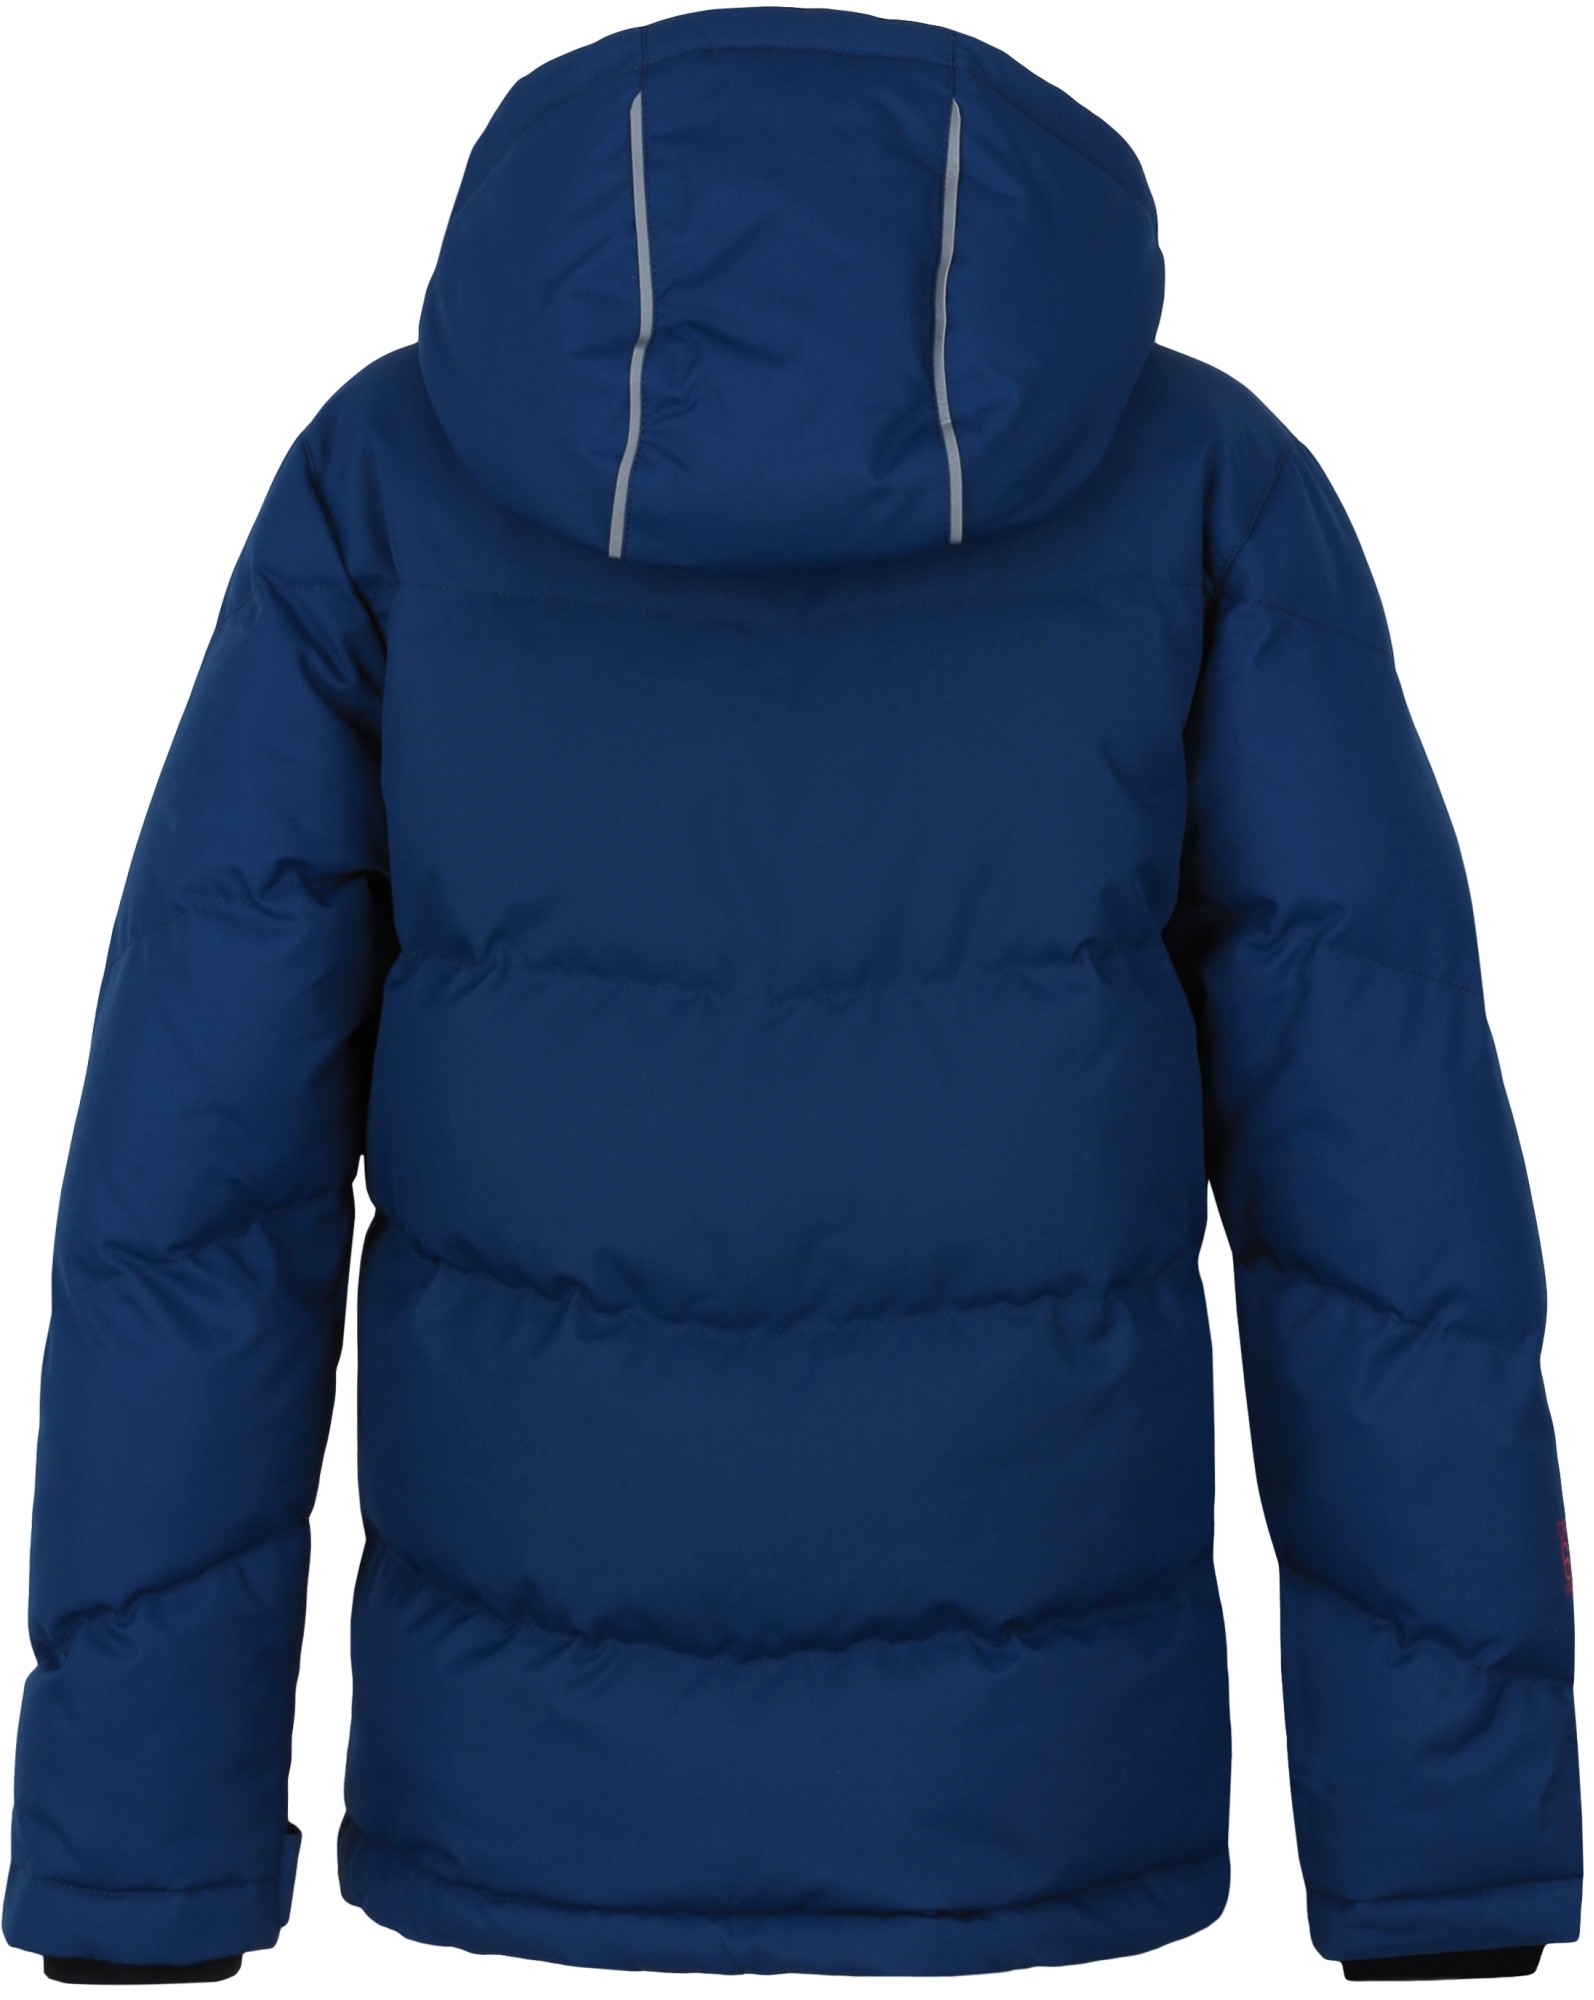 Kids’ skiing jacket